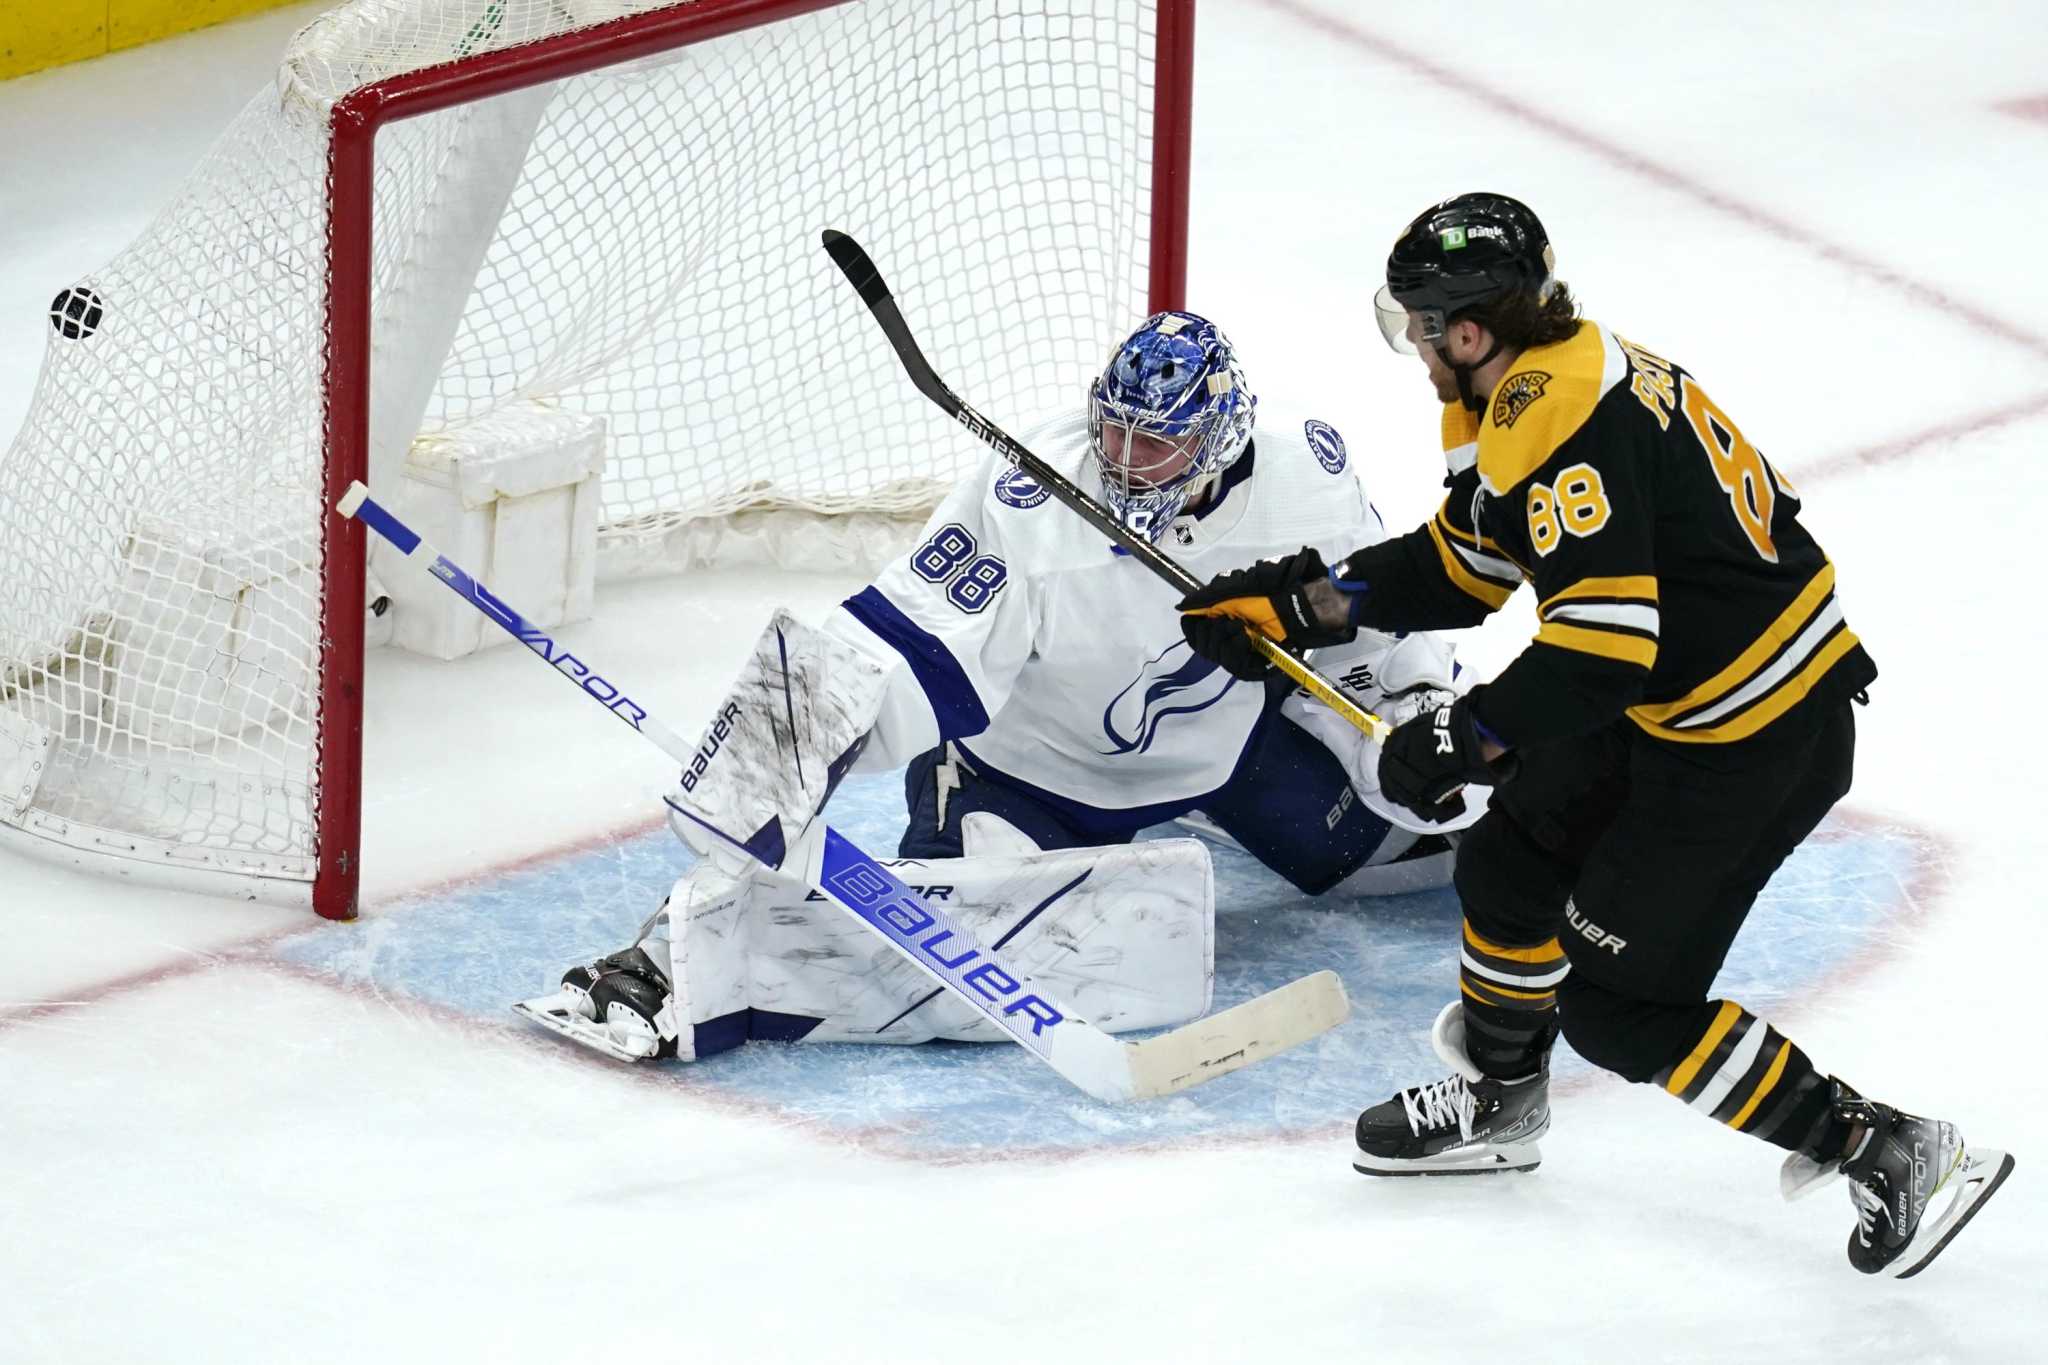 NHL roundup: David Pastrnak's hat trick carries Bruins past Ducks